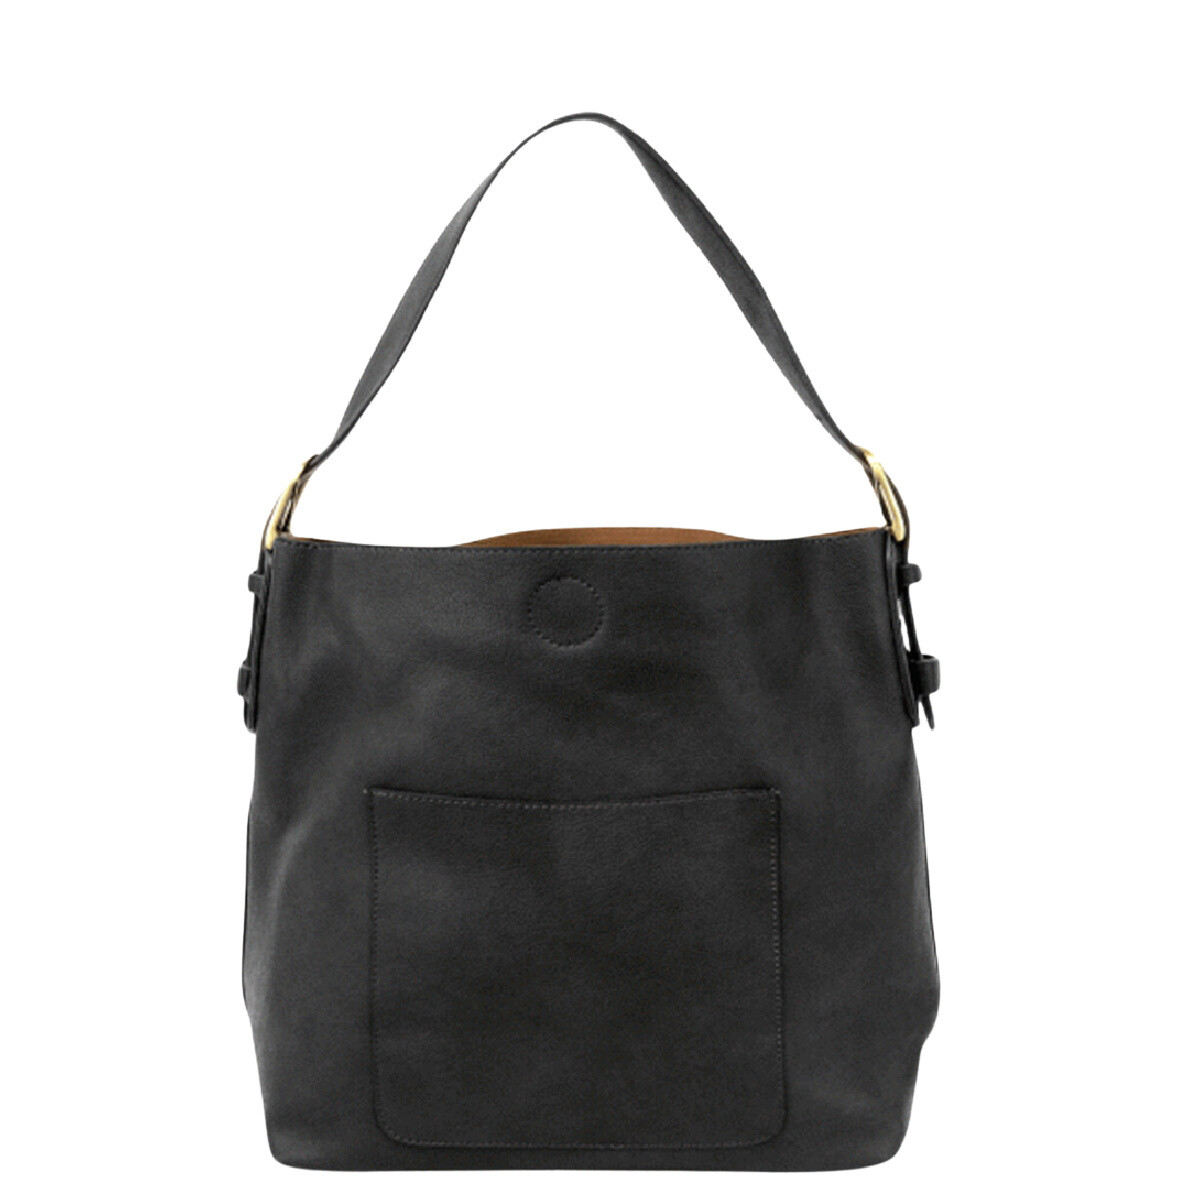 Joy Susan Classic Hobo Handbag Black w/ Black Handle